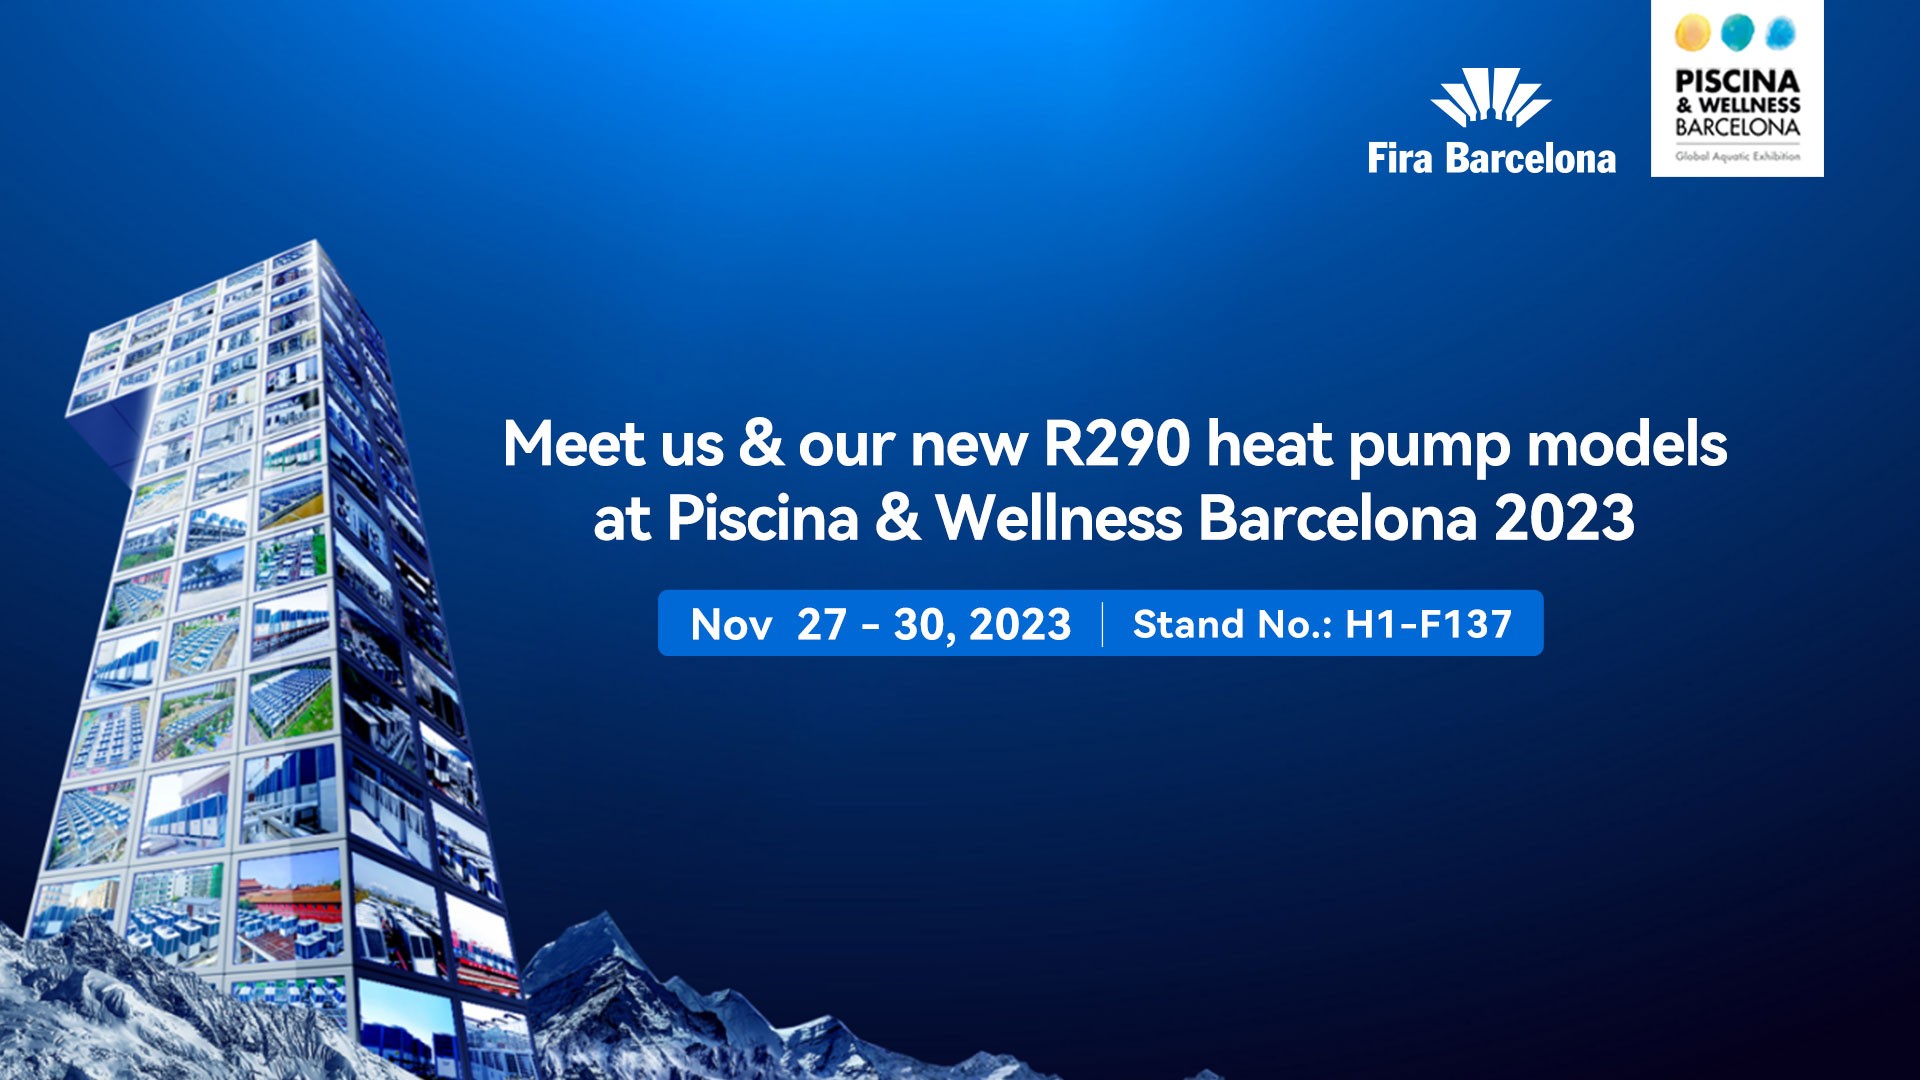 Meet us & our new R290 heat pump models at Piscina & Wellness Barcelona 2023